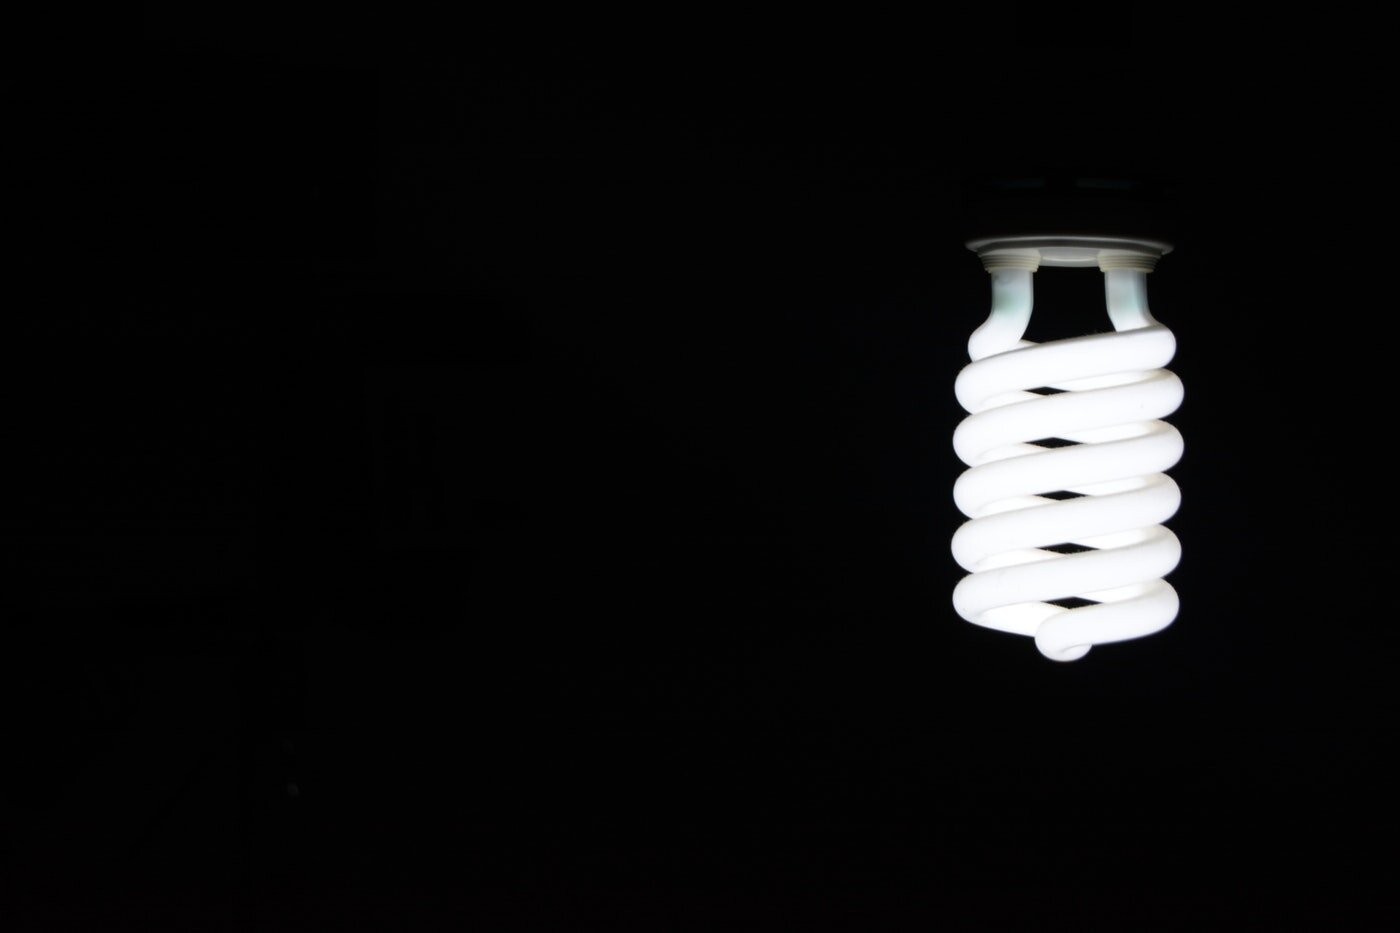 Led bulb on black background - energy saving tips for businesses